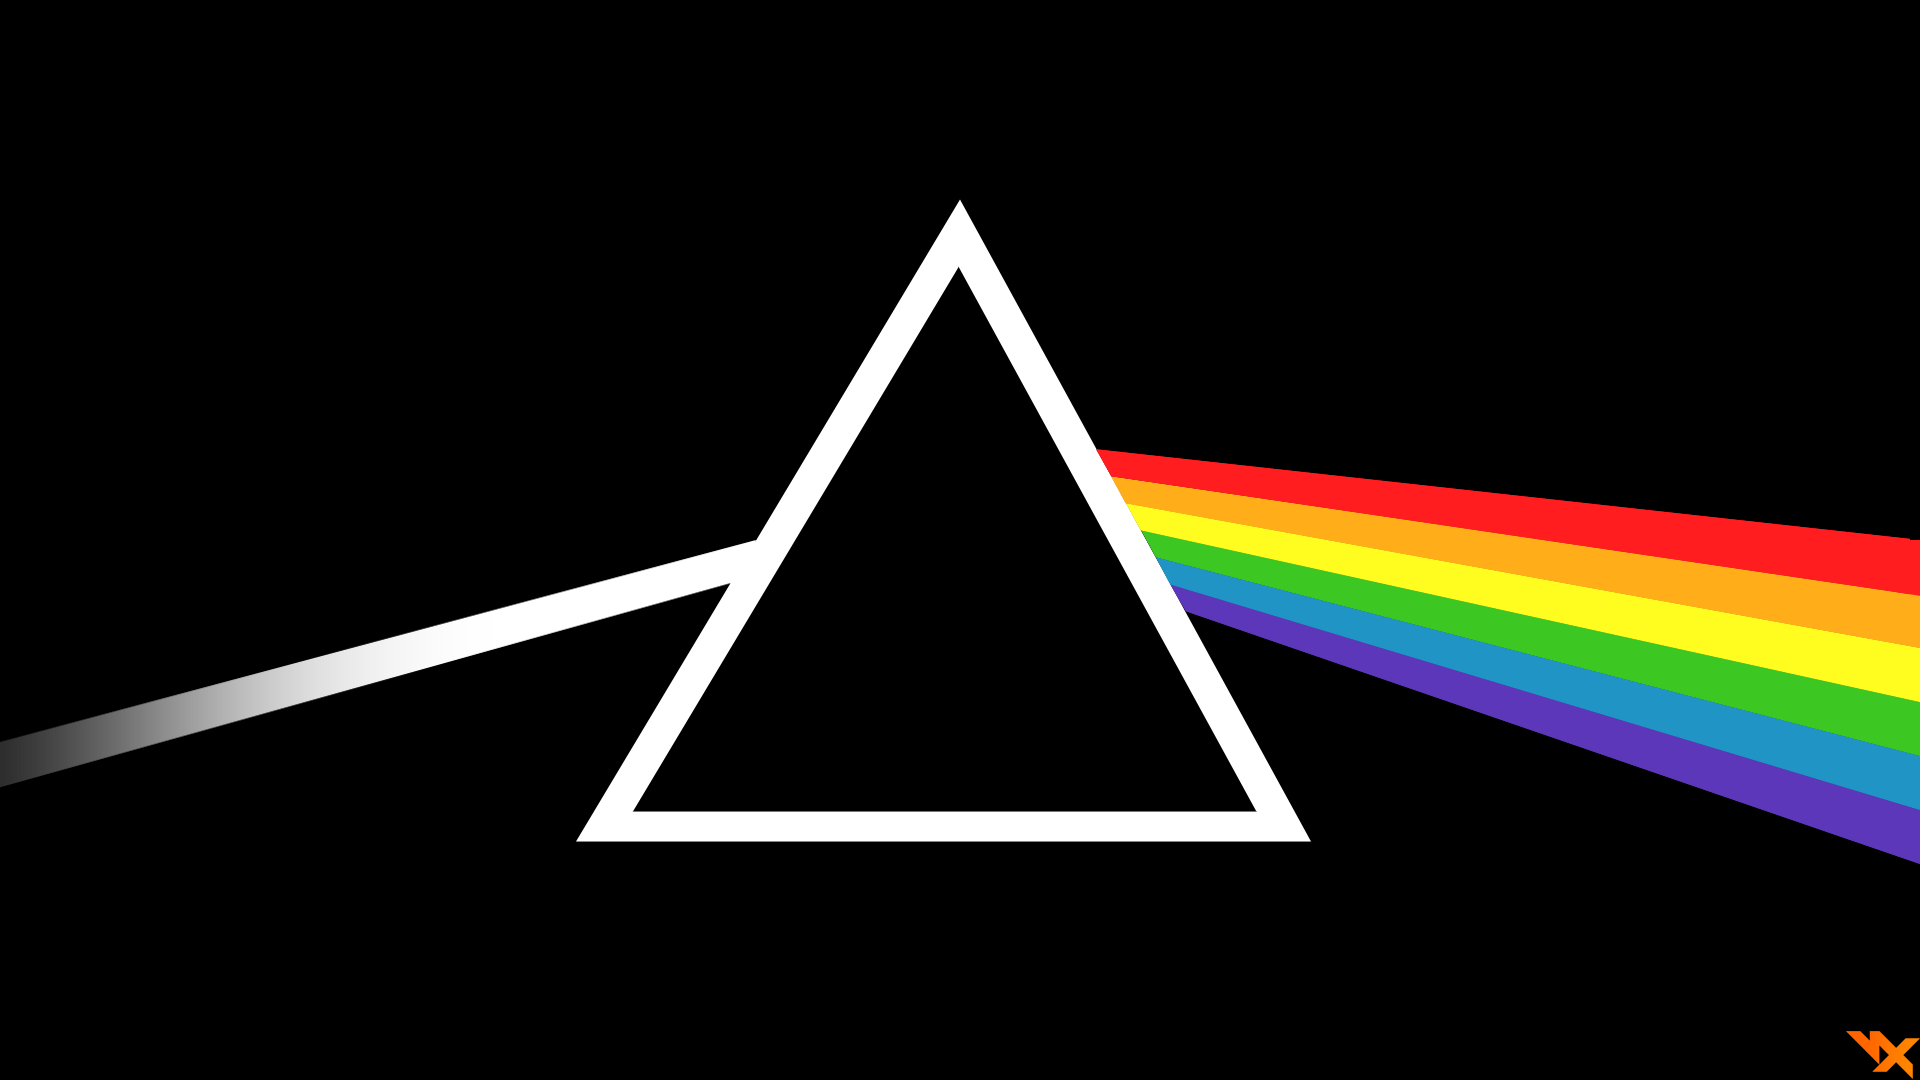 I Made A Simplistic Pink Floyd Pride Flag Wallpaper